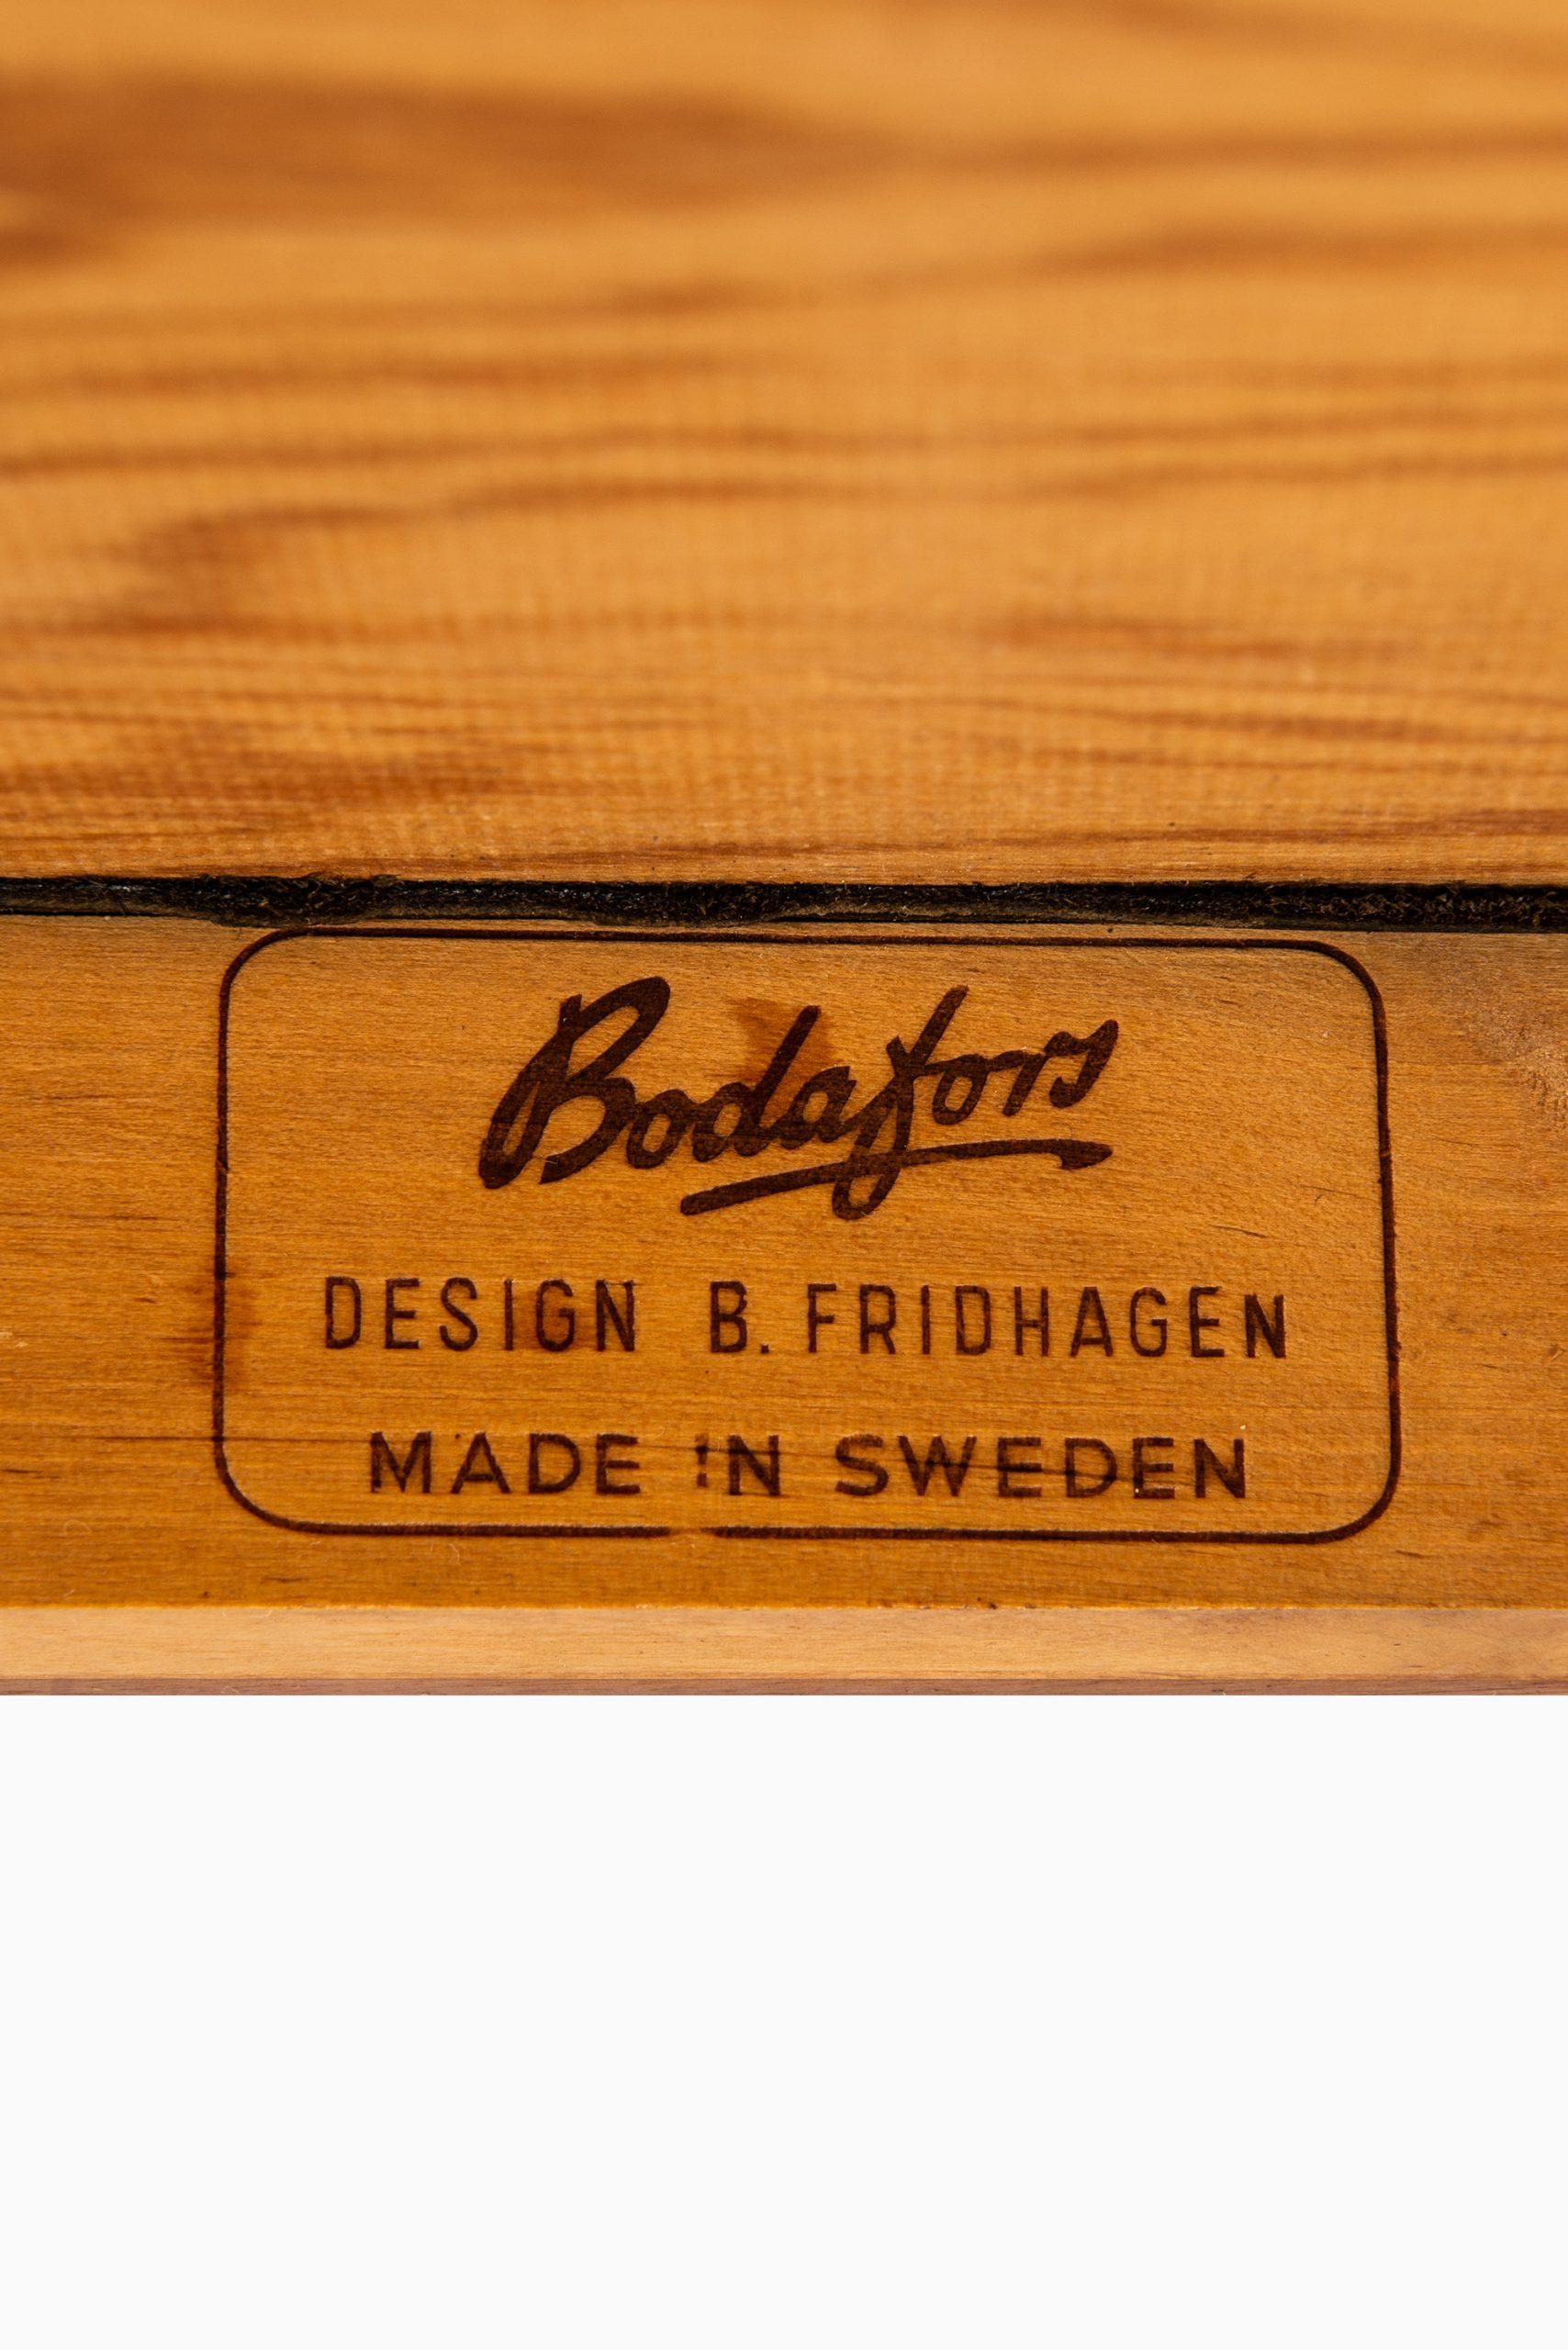 Brass Bertil Fridhagen Dining Chairs Model Diamant Produced by Bodafors in Sweden